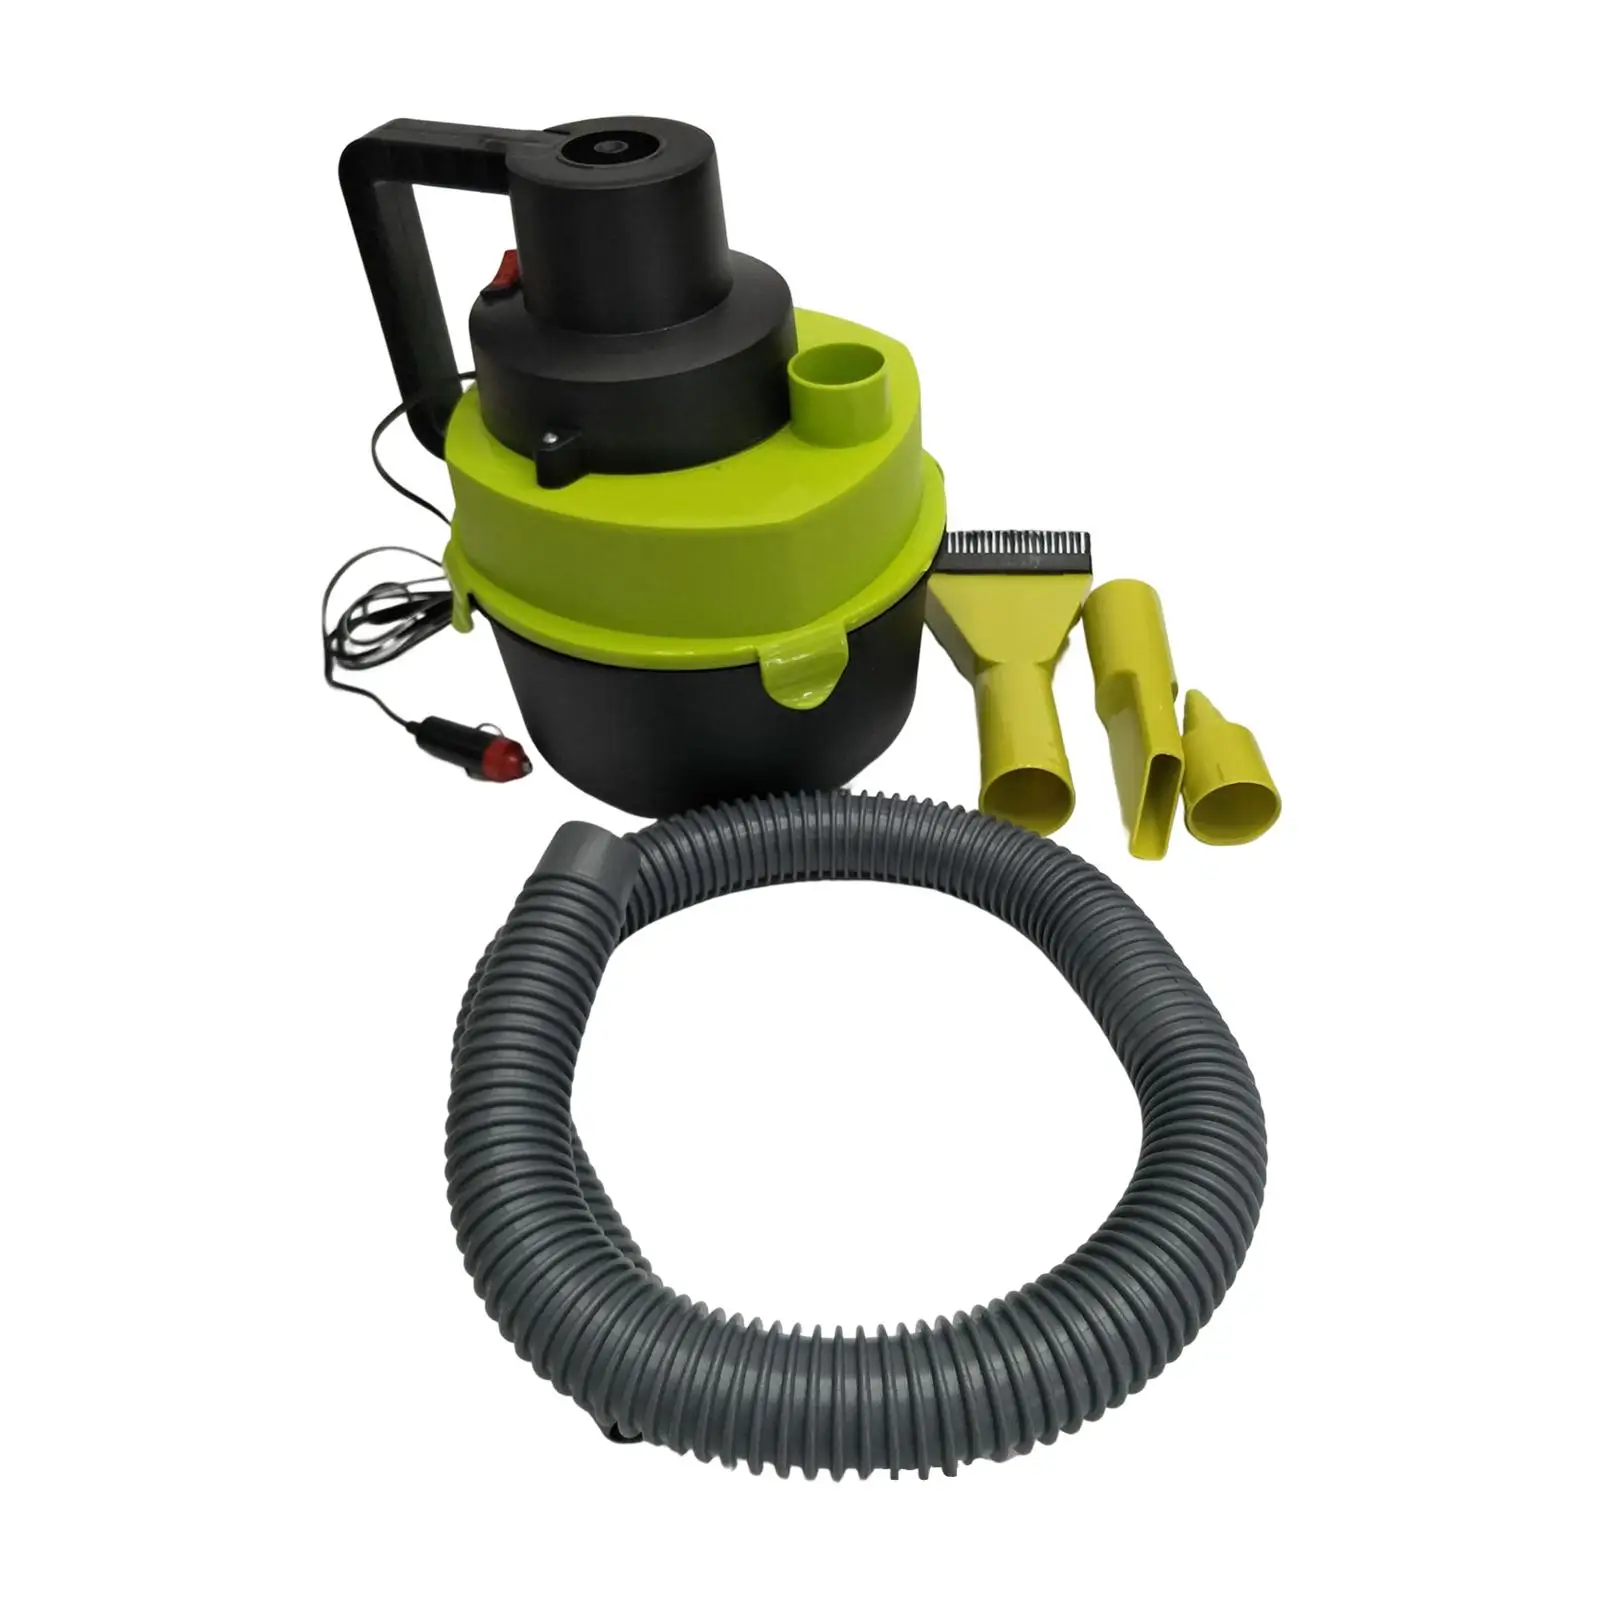 Car Vacuum Blowing Function Debris Dry Garbage 4L Liquid Dual Use Shop Vacuum Cleaner for Garage Carpet RV Window Seams Trucks